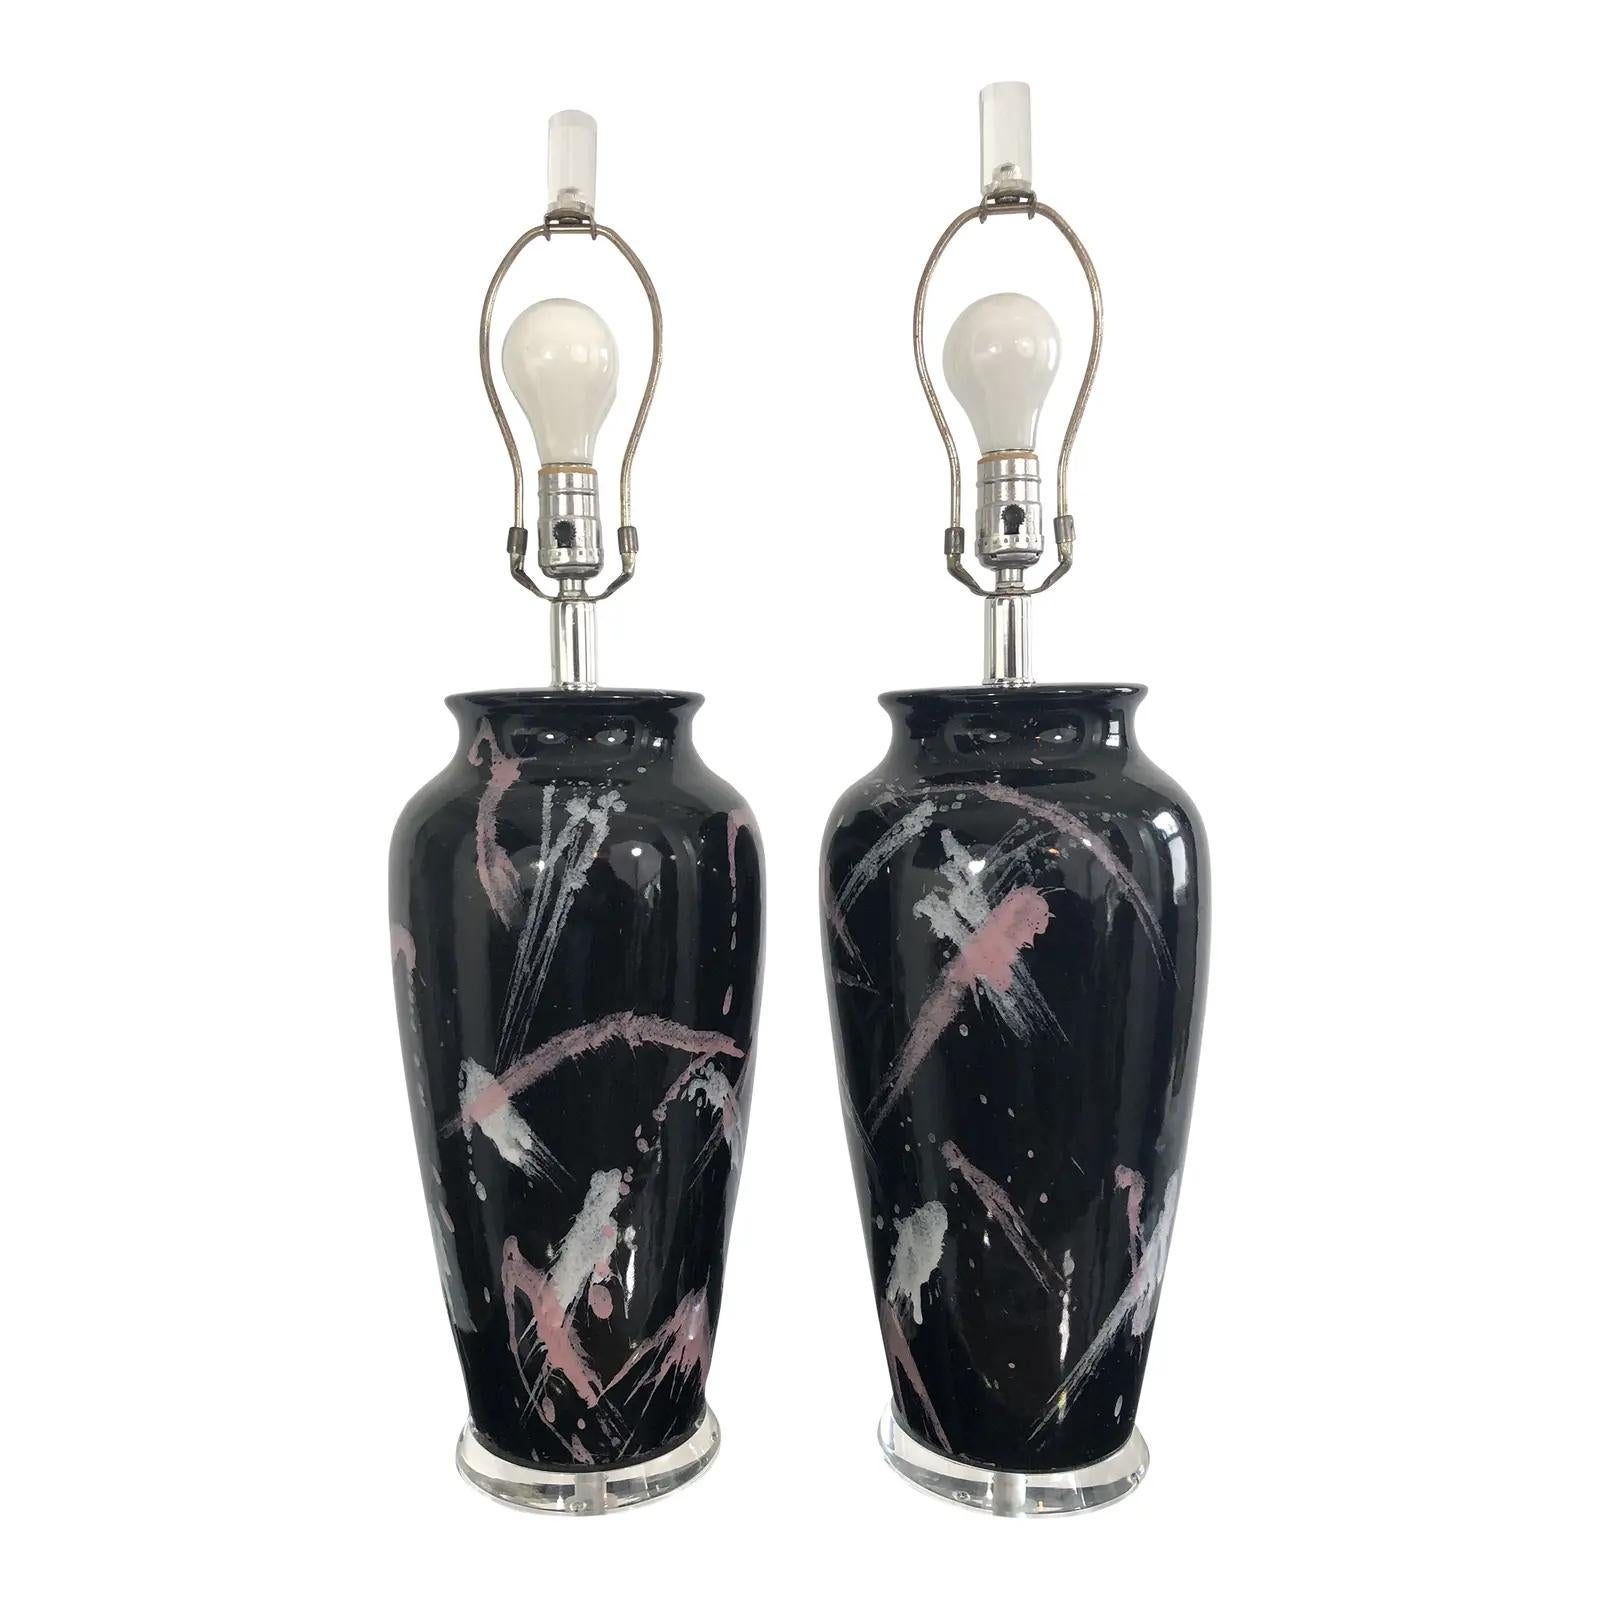 Glass Vintage Postmodern Jackson Pollock Style Splatter Glaze Lamps - a Pair For Sale